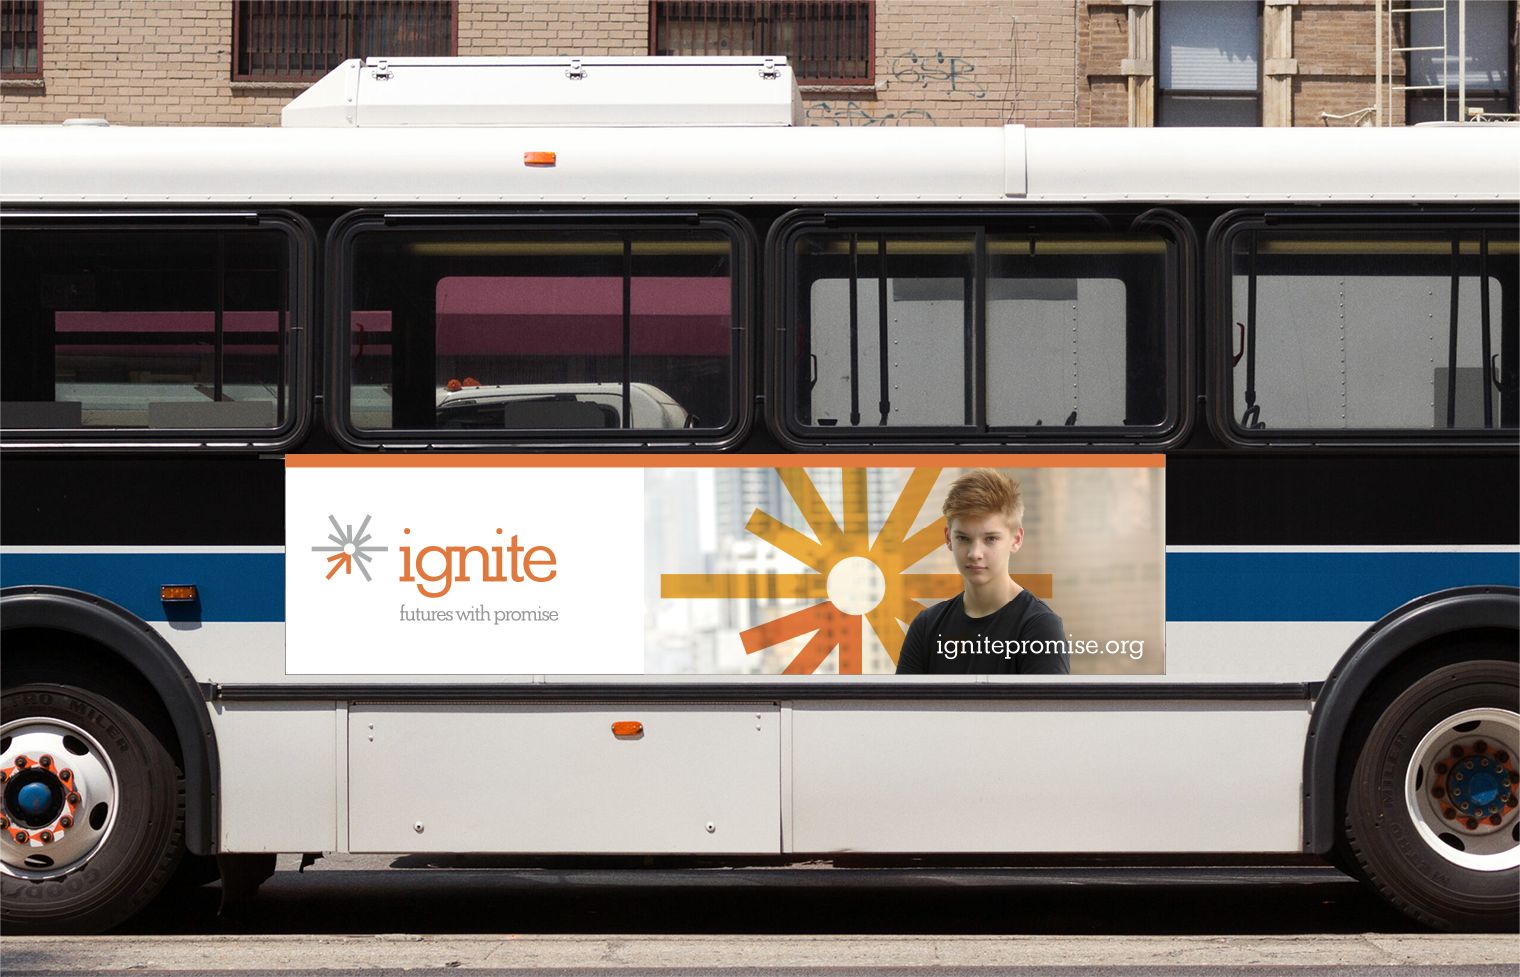 Ignite banner on bus